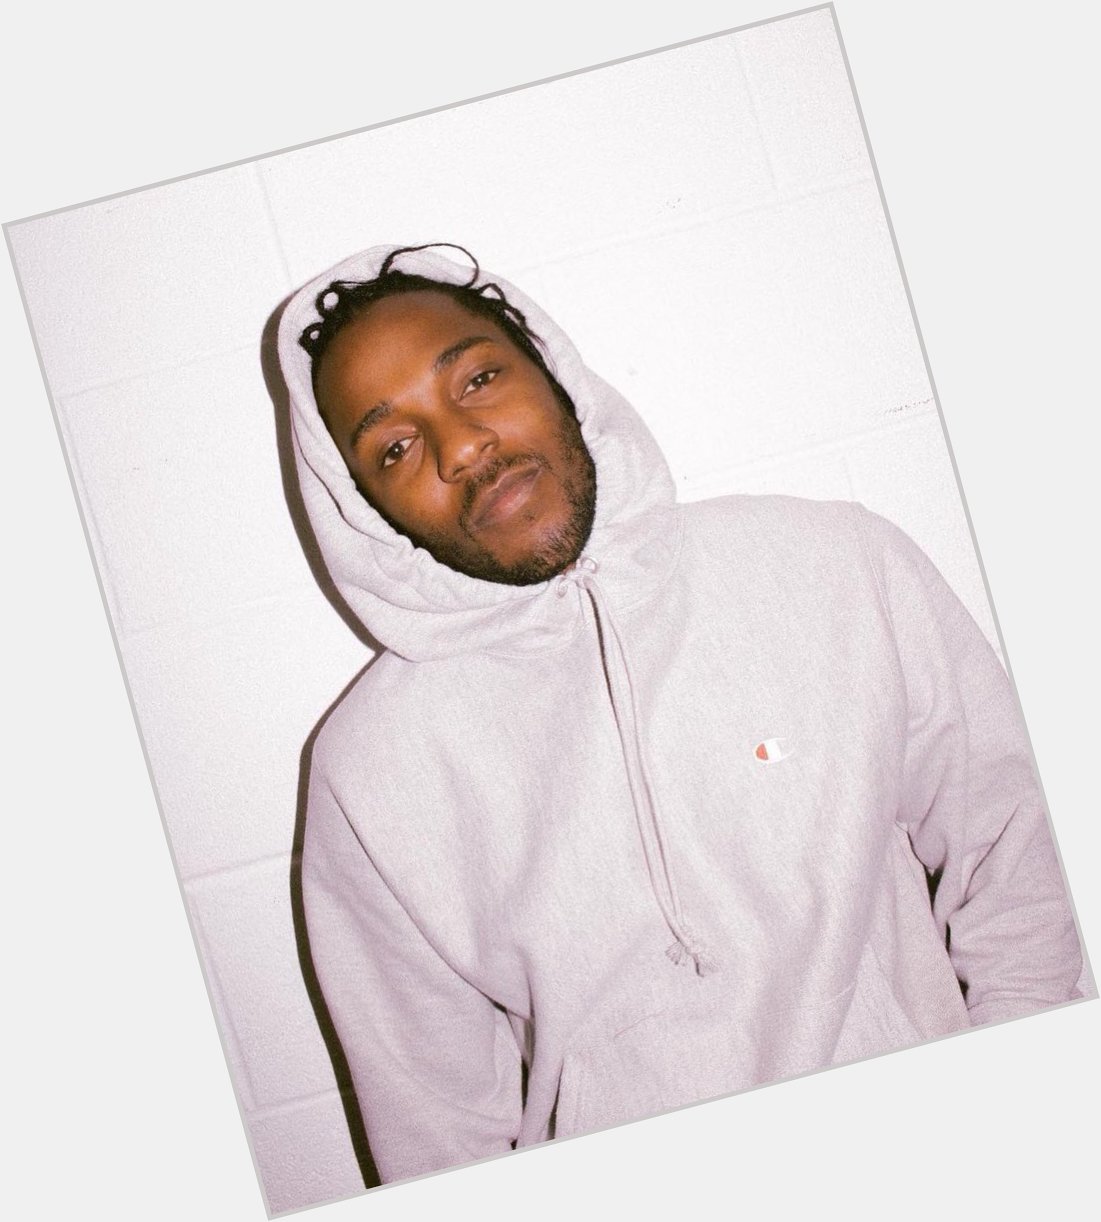 Kendrick Lamar turned 36 today Happy Birthday to Kendrick Lamar 